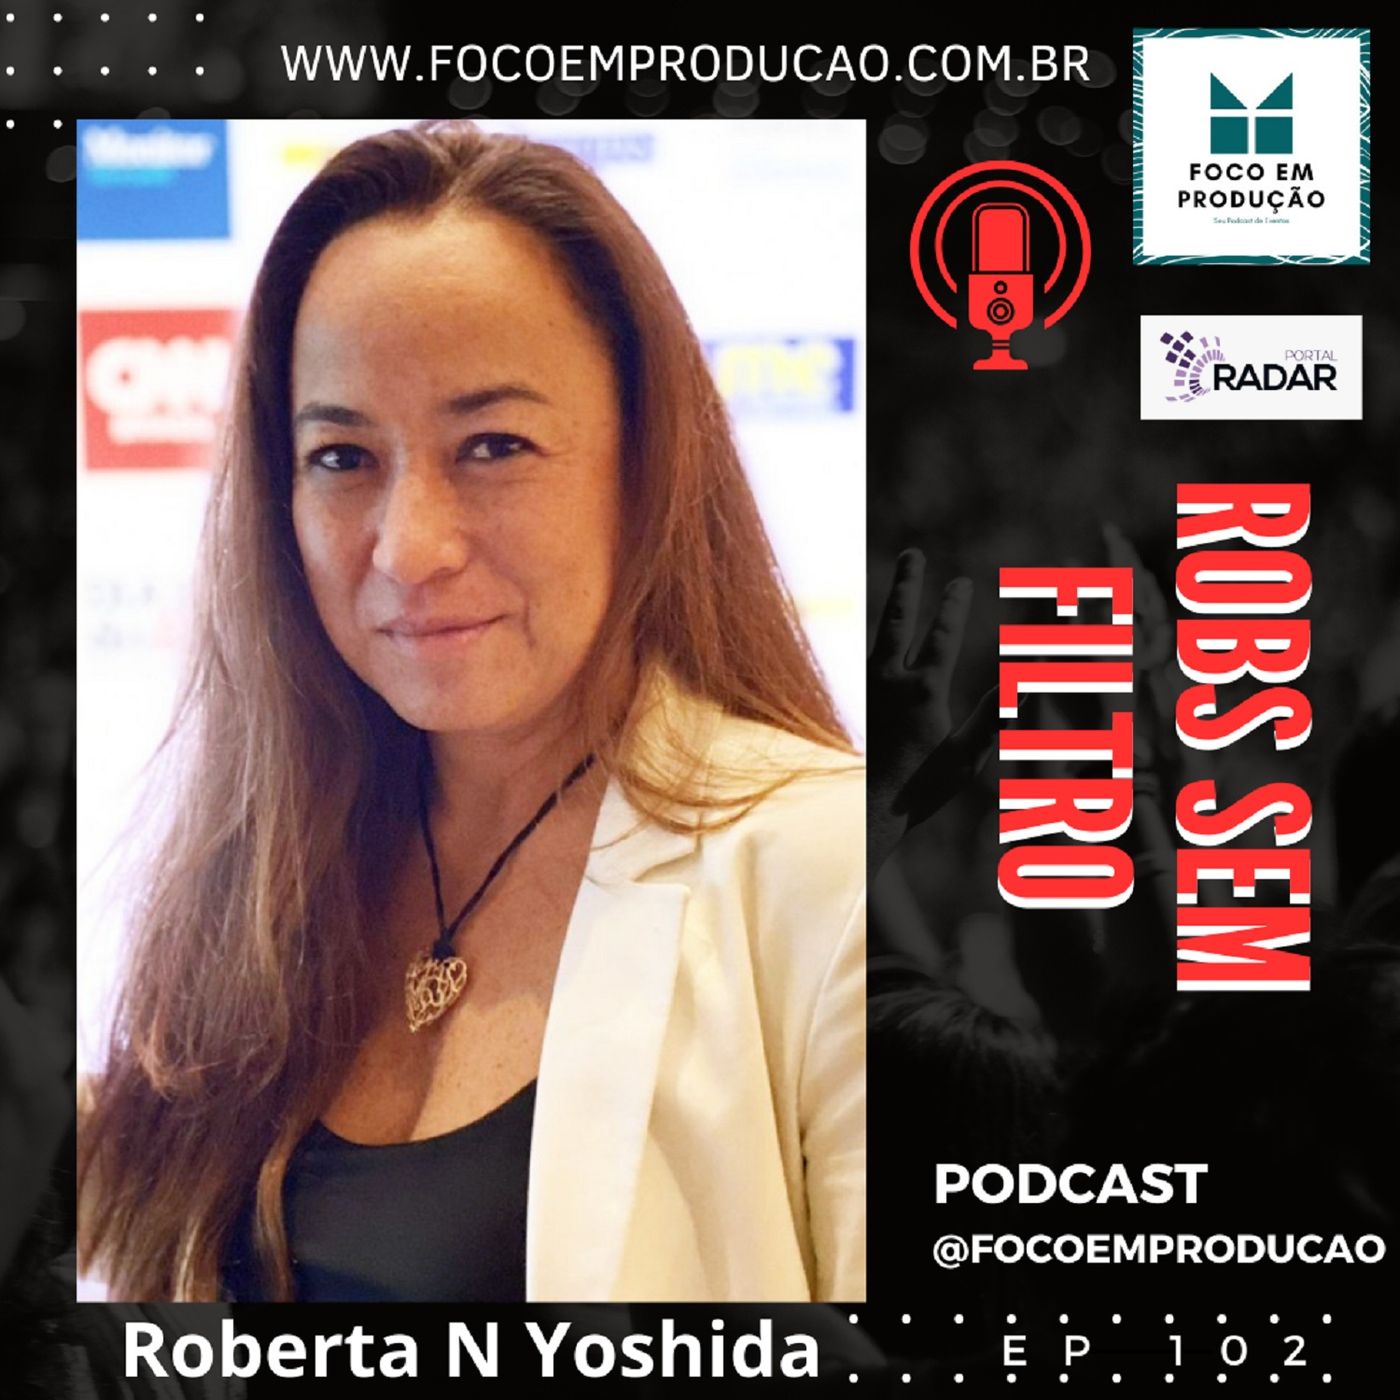 EP 102 - Robs sem Filtro com Roberta N Yoshida (Portal Radar)